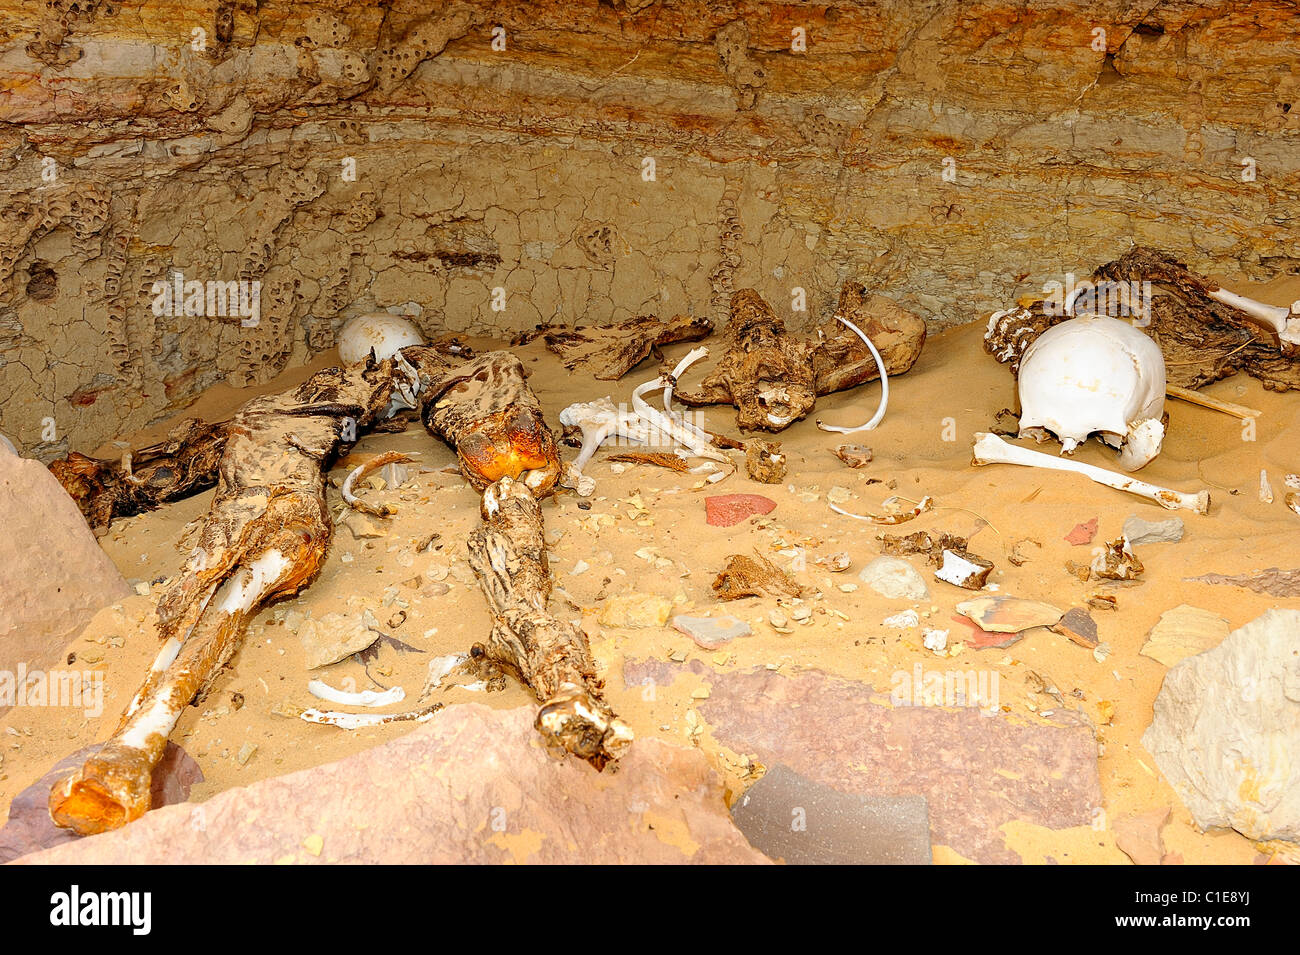 Open Roman grave with skeletons, bones and skulls in the Western Desert, Egypt Stock Photo